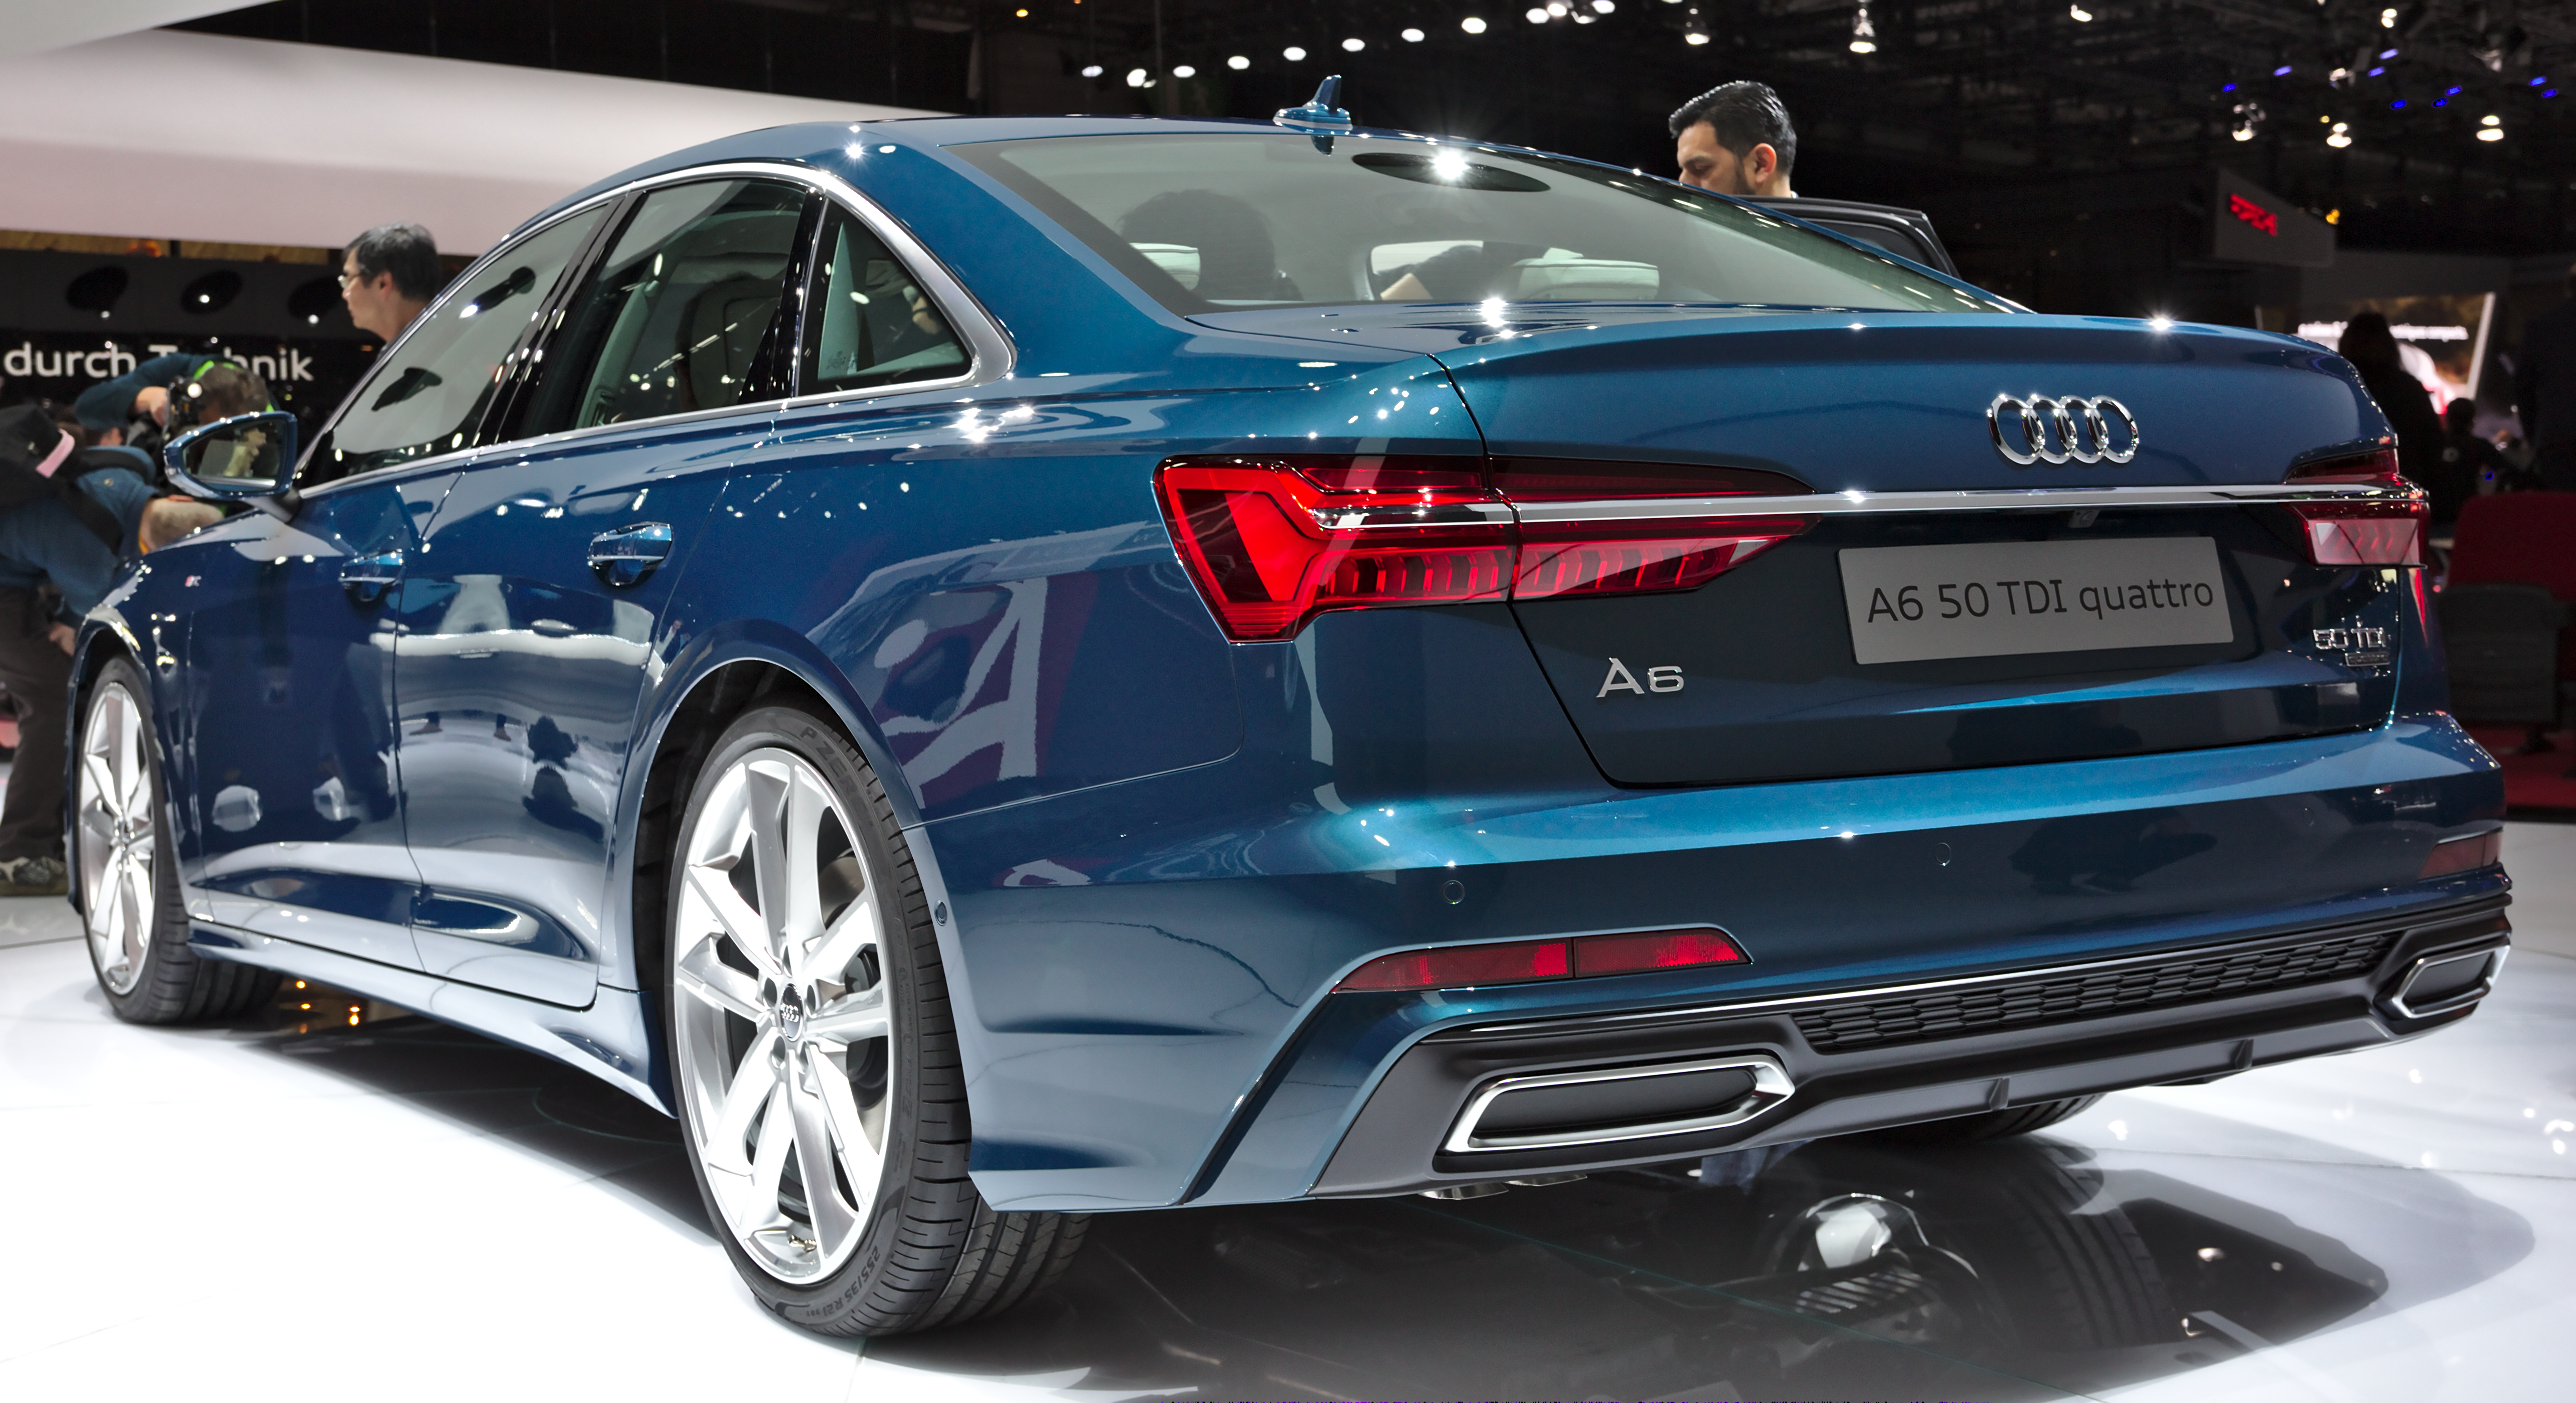 Archivo:Audi A6 Back I Genf 2018.jpg - Wikipedia, la enciclopedia libre